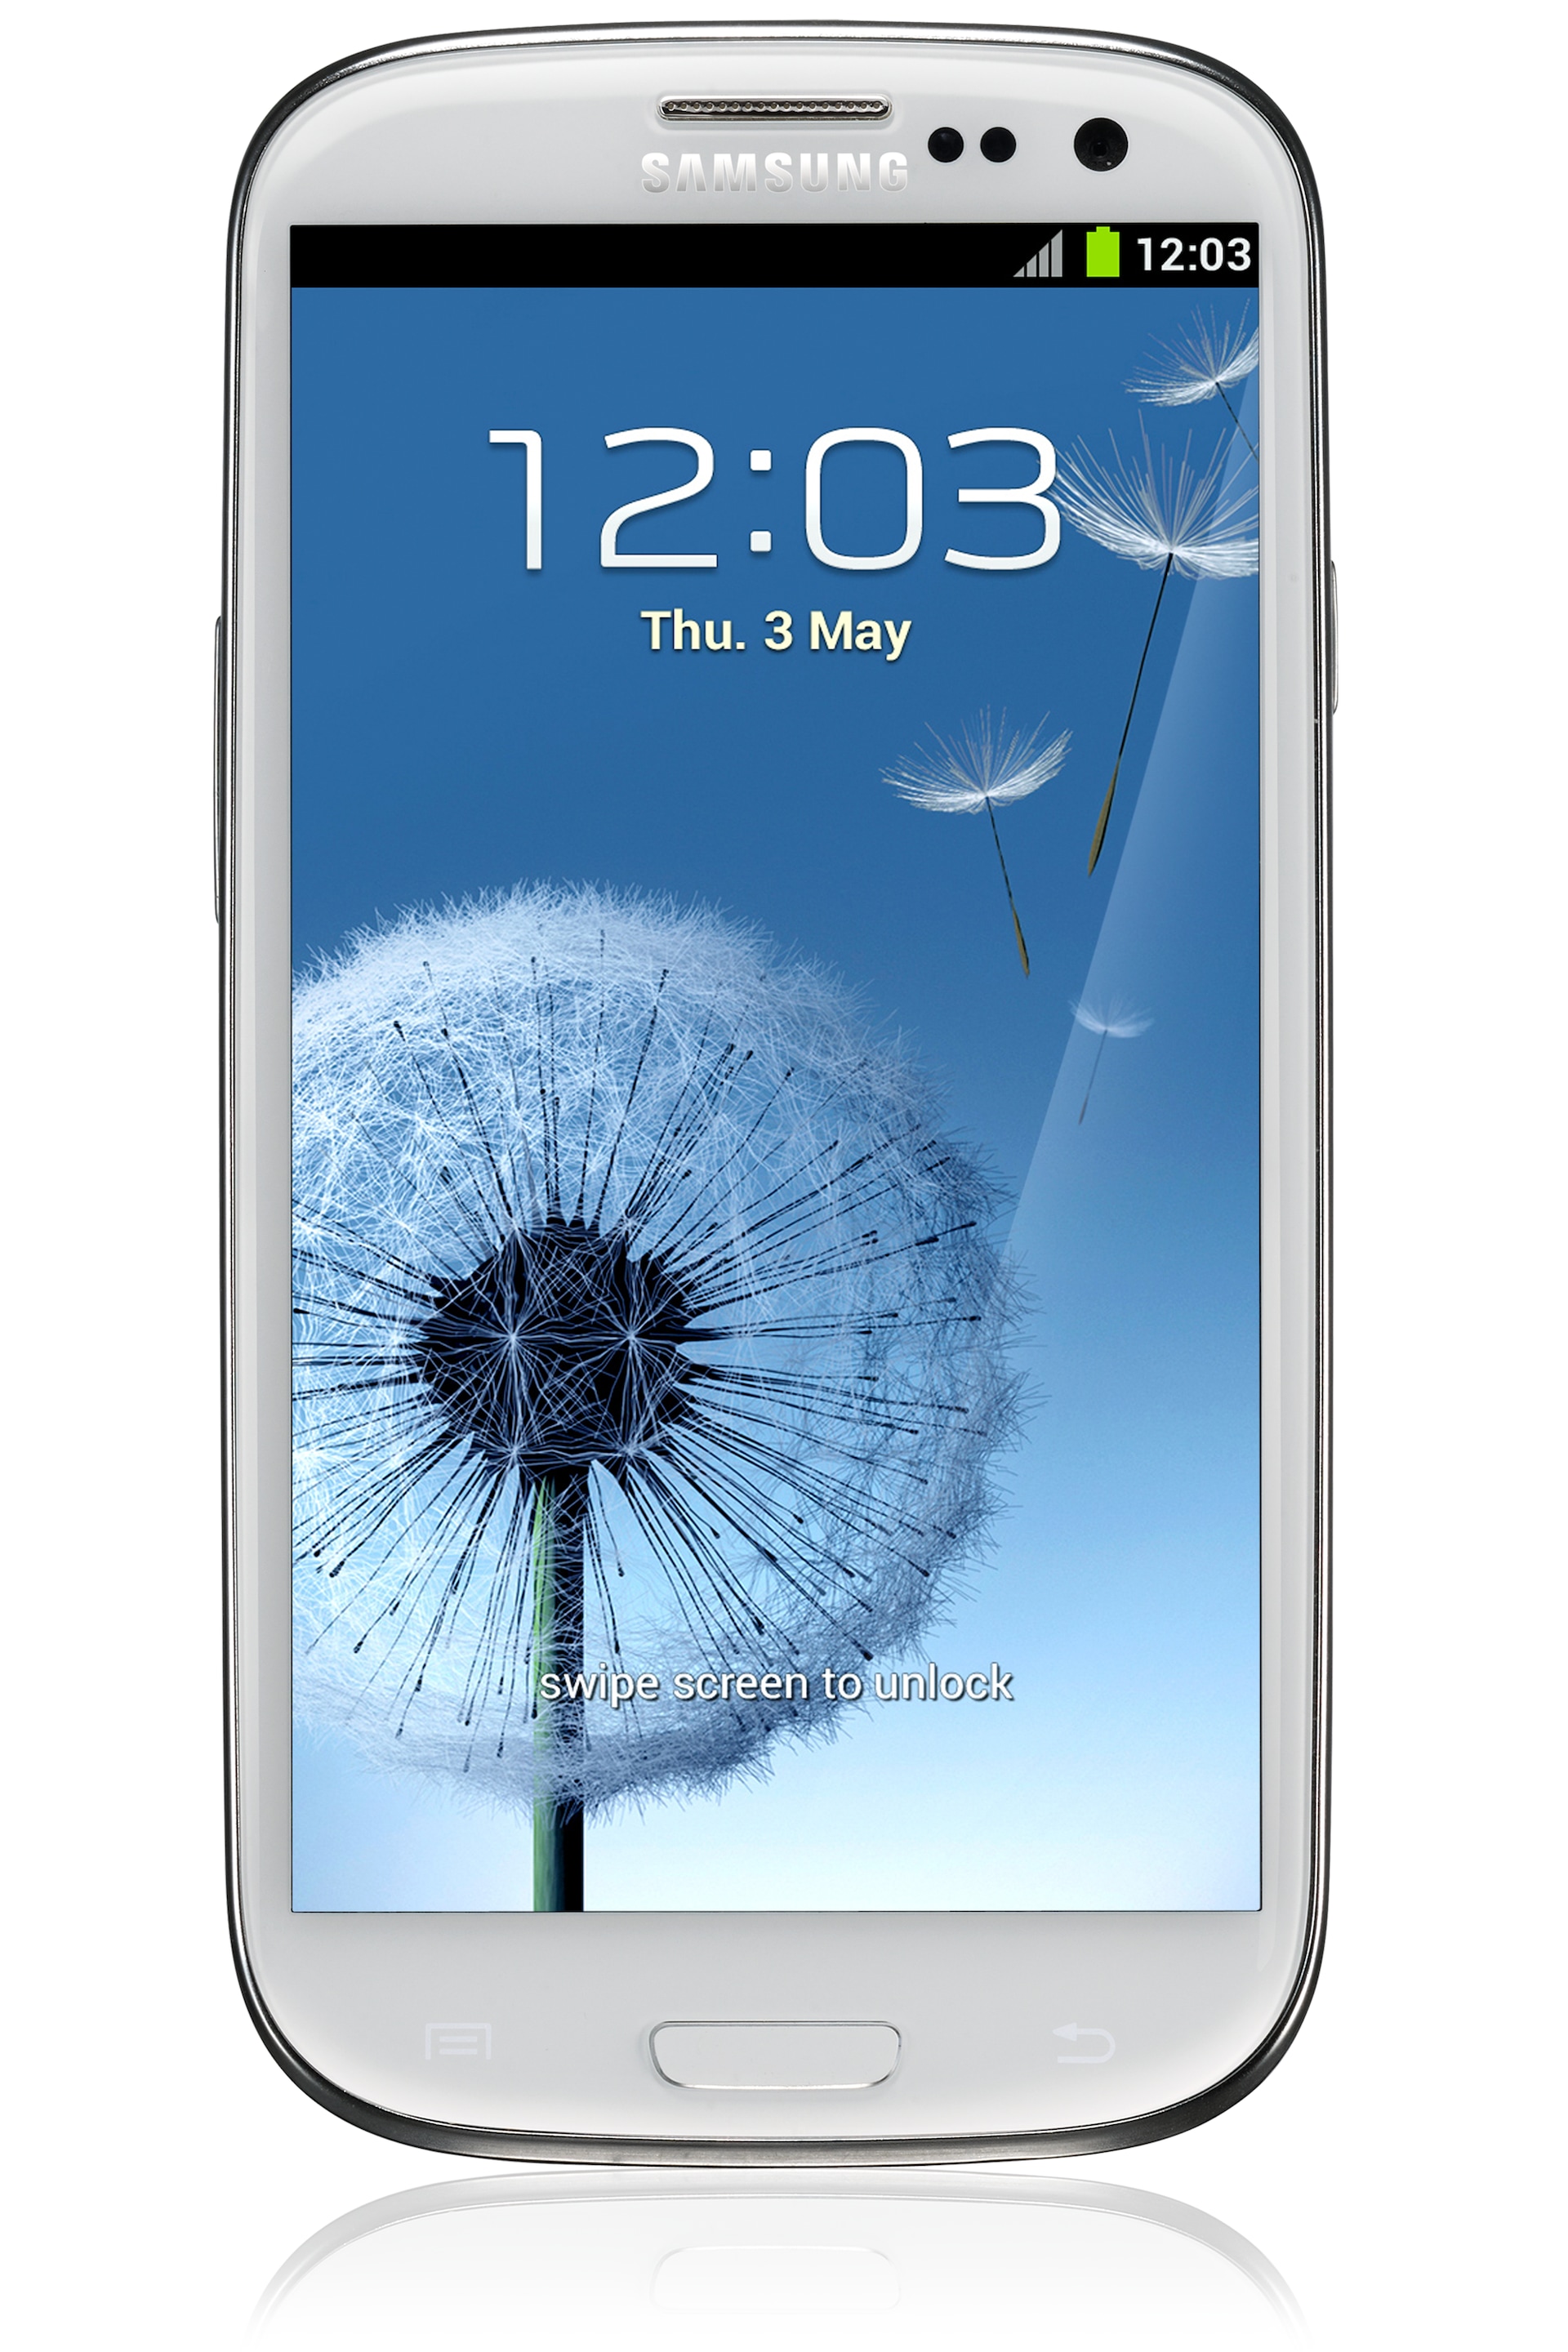 ego De Alpen aanvaardbaar Samsung Galaxy S III (S3) - 3G WiFi NFC 8MP Camera Phone | Samsung IE